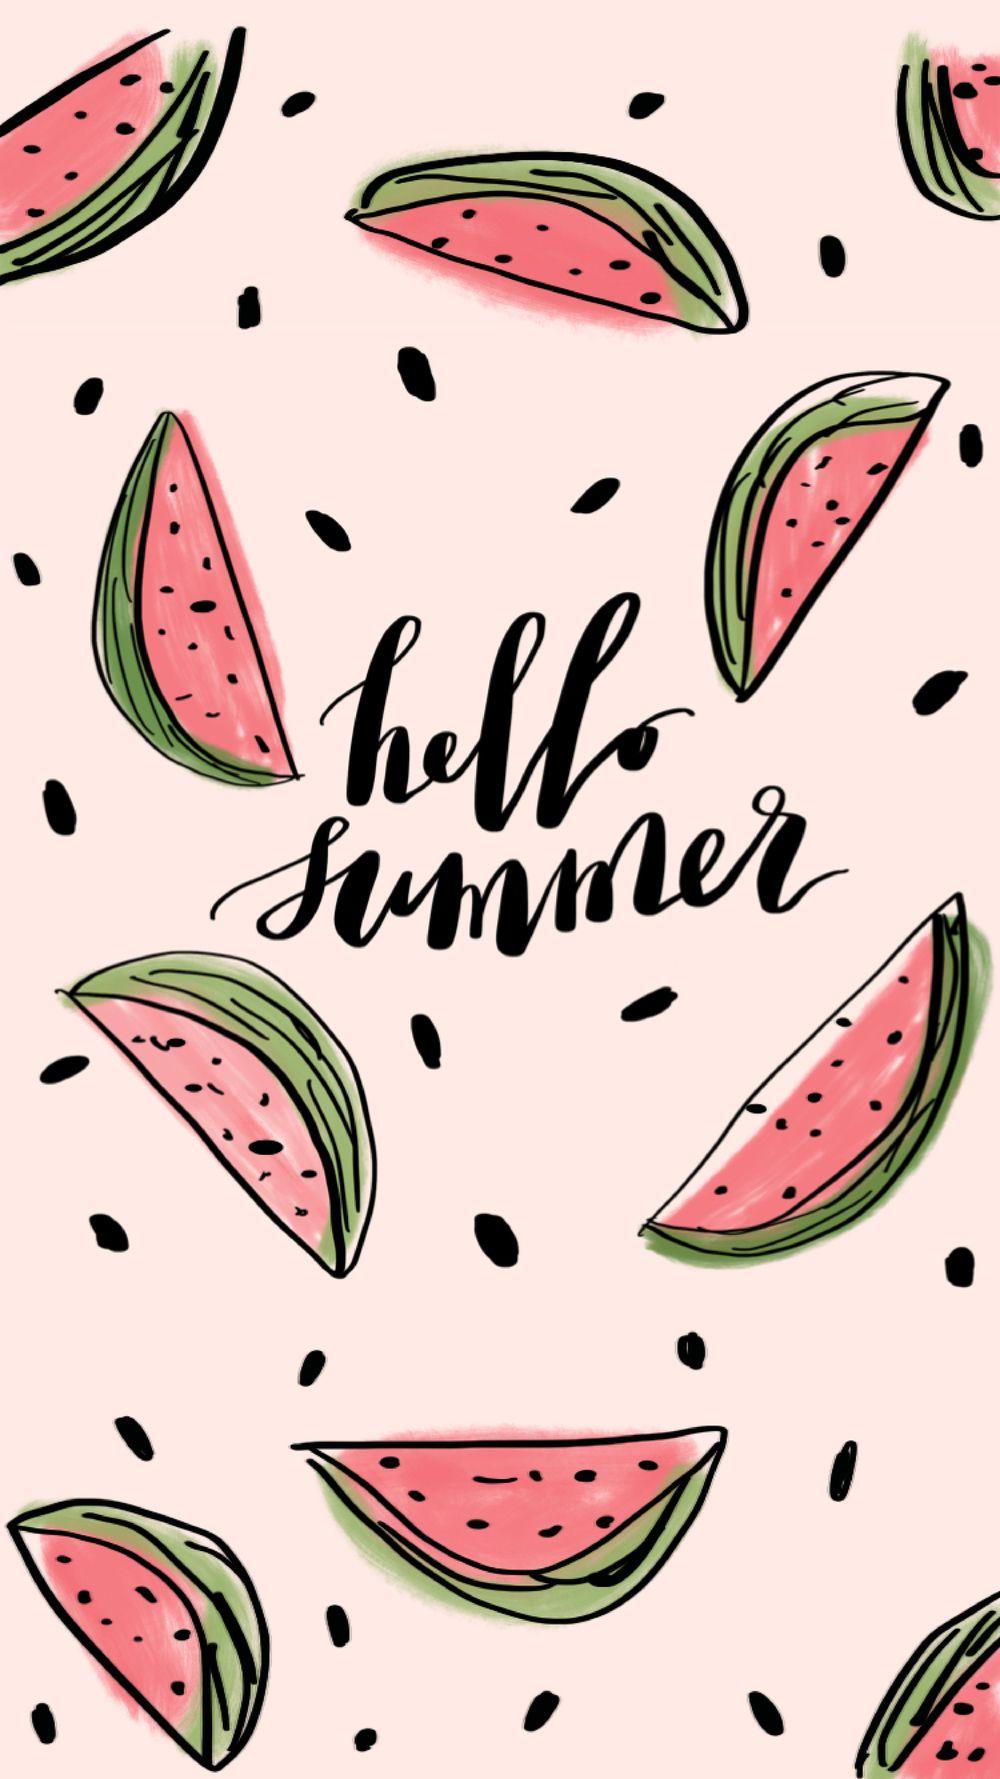 27900 Watermelon Background Illustrations RoyaltyFree Vector Graphics   Clip Art  iStock  Watermelon background vector Summer watermelon  background